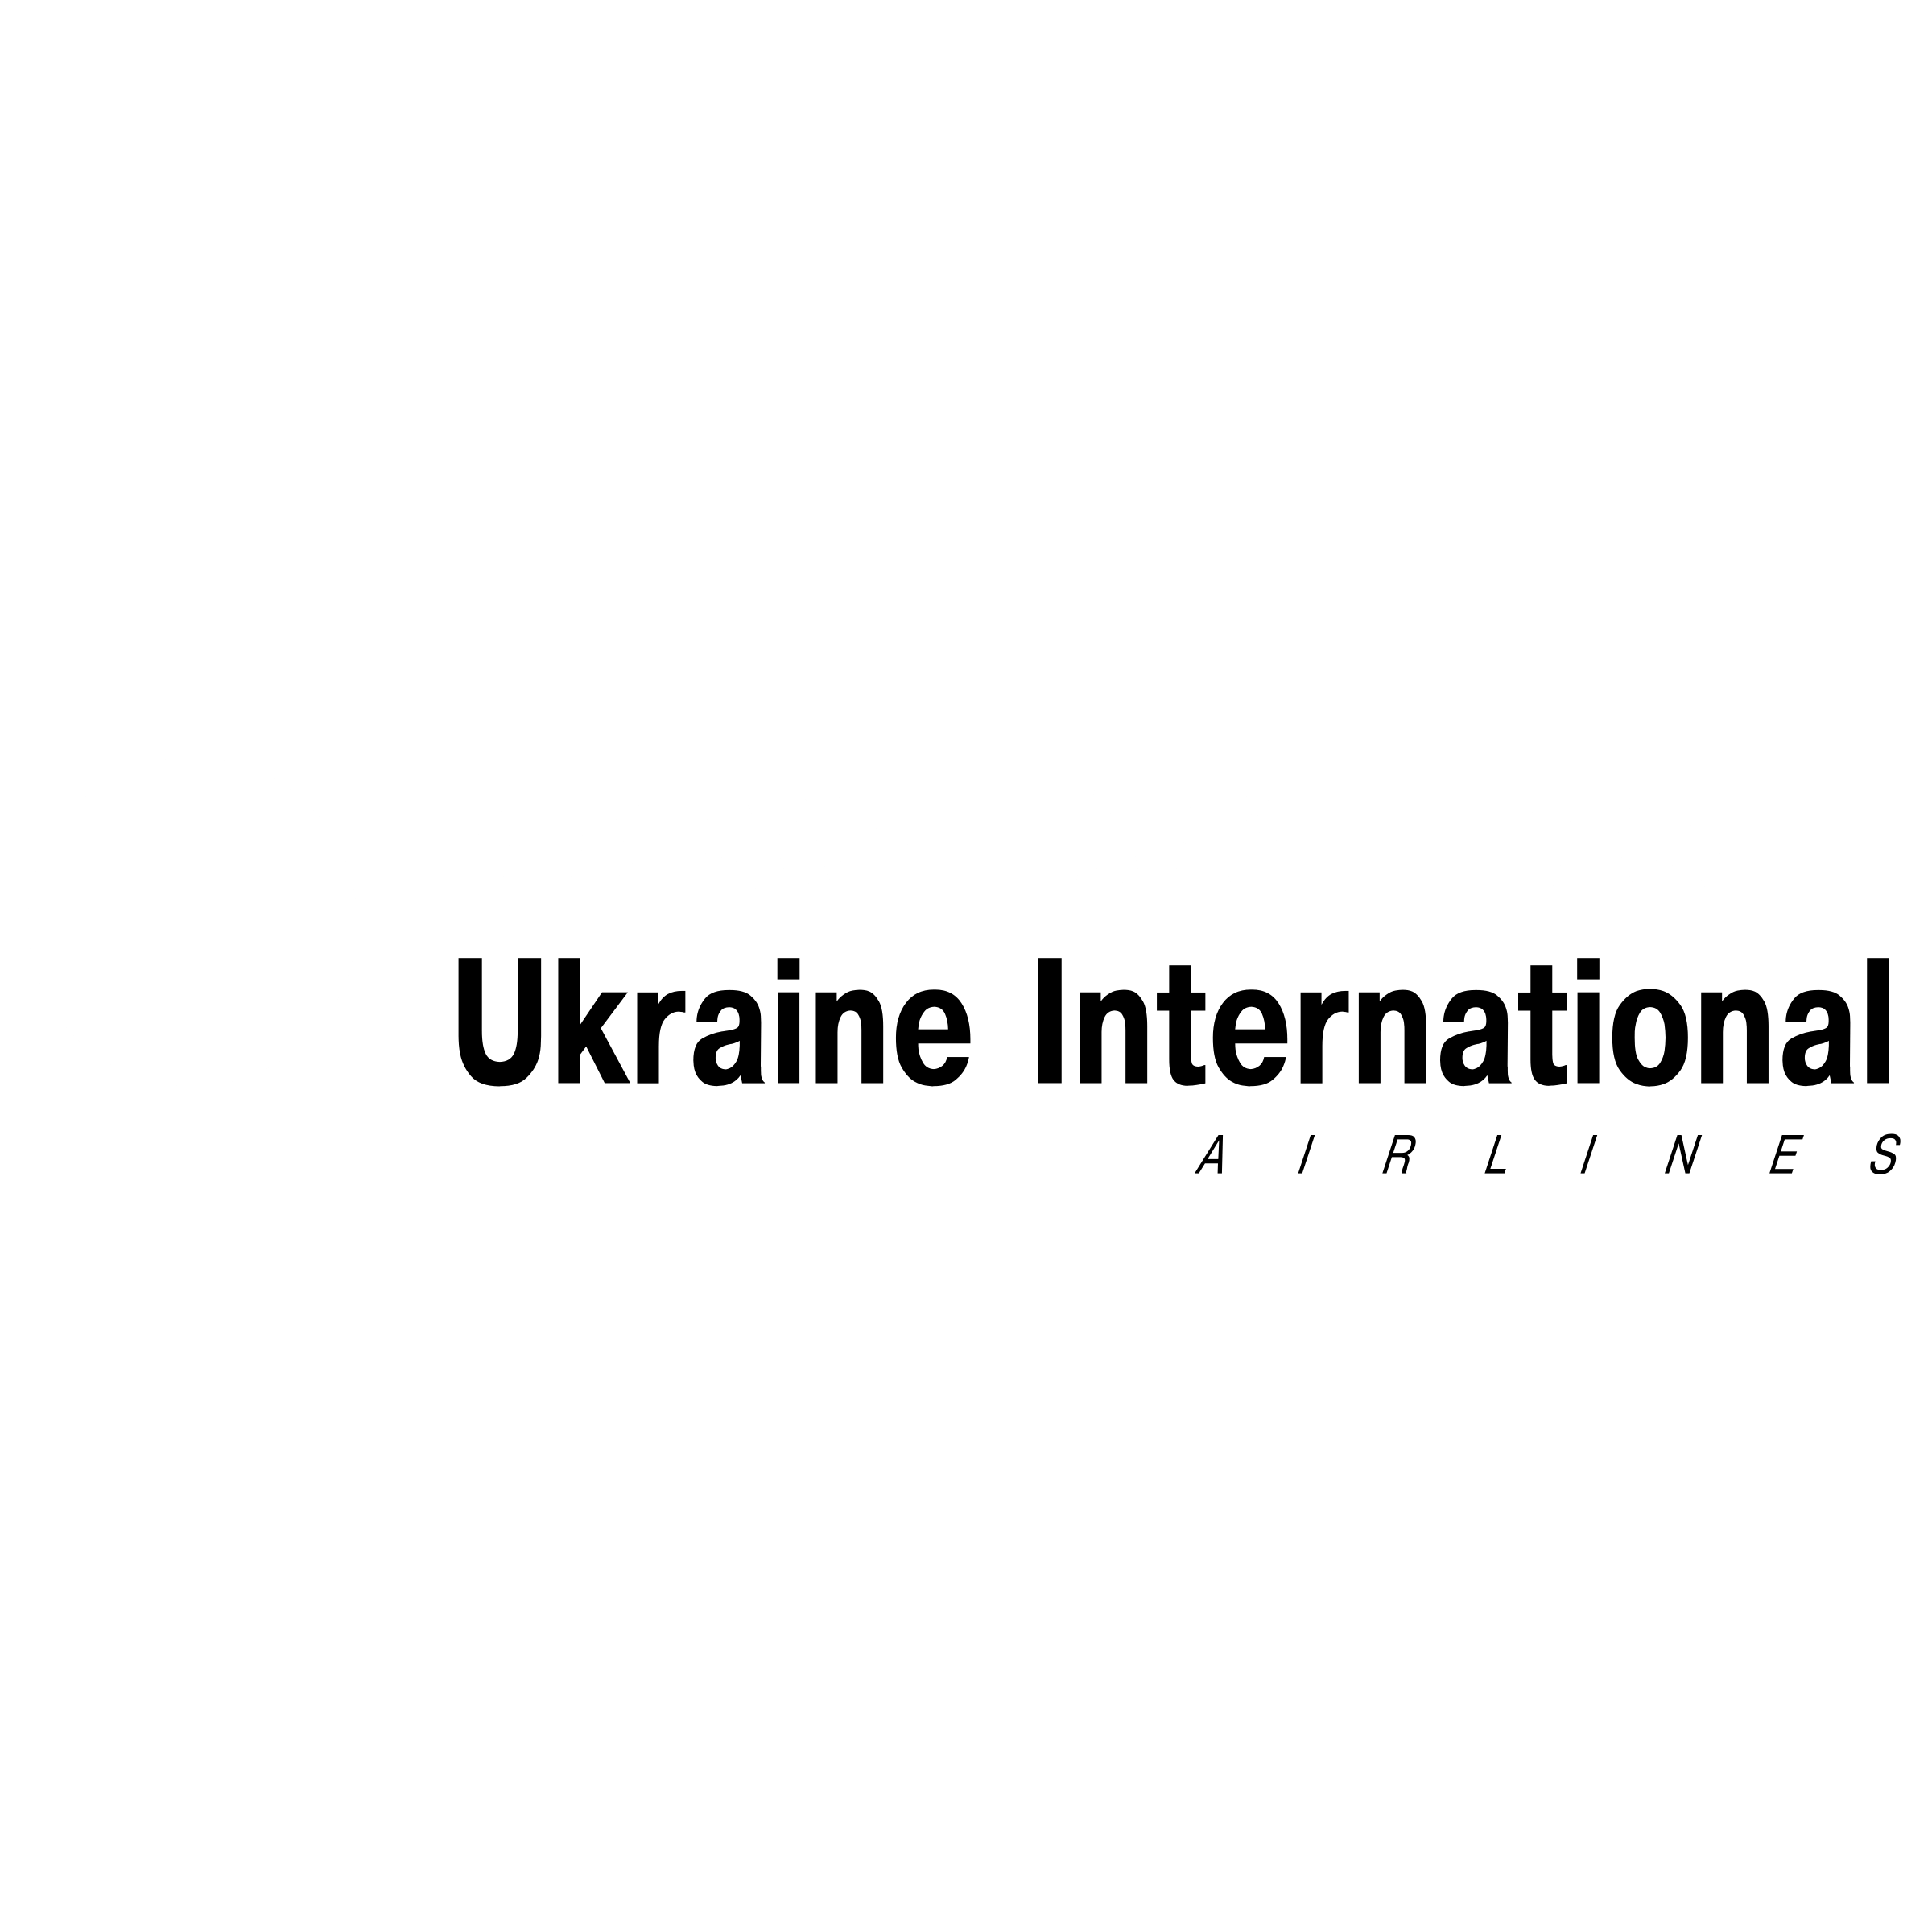 Ukraine International Airlines Logo - Ukraine International Airlines Logo PNG Transparent & SVG Vector ...